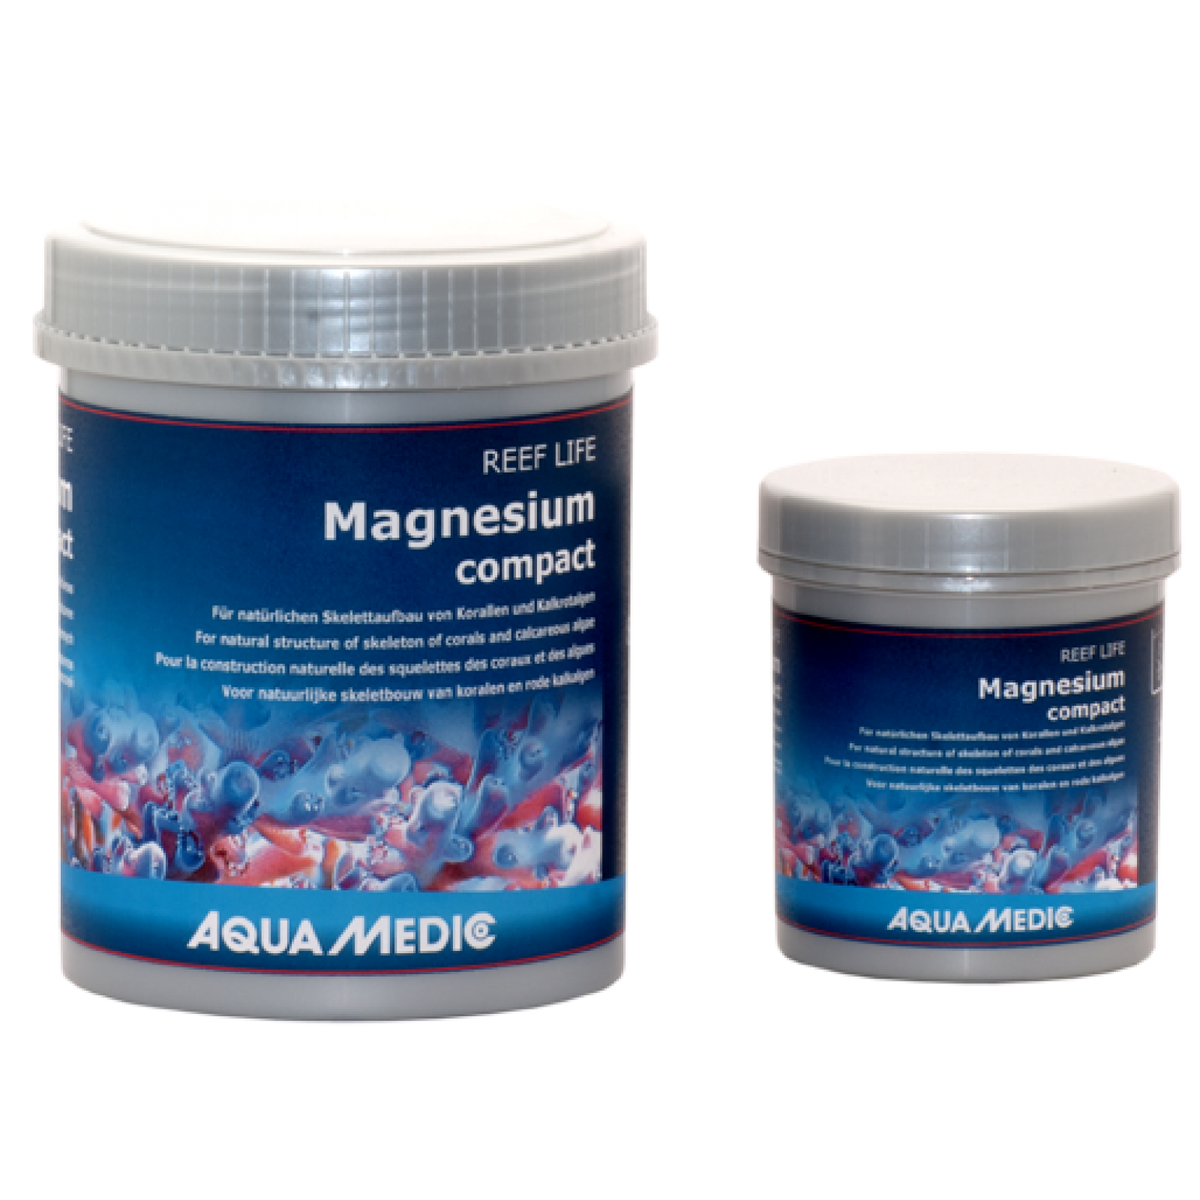 Aqua Medic Reef Life Magnesium Compact